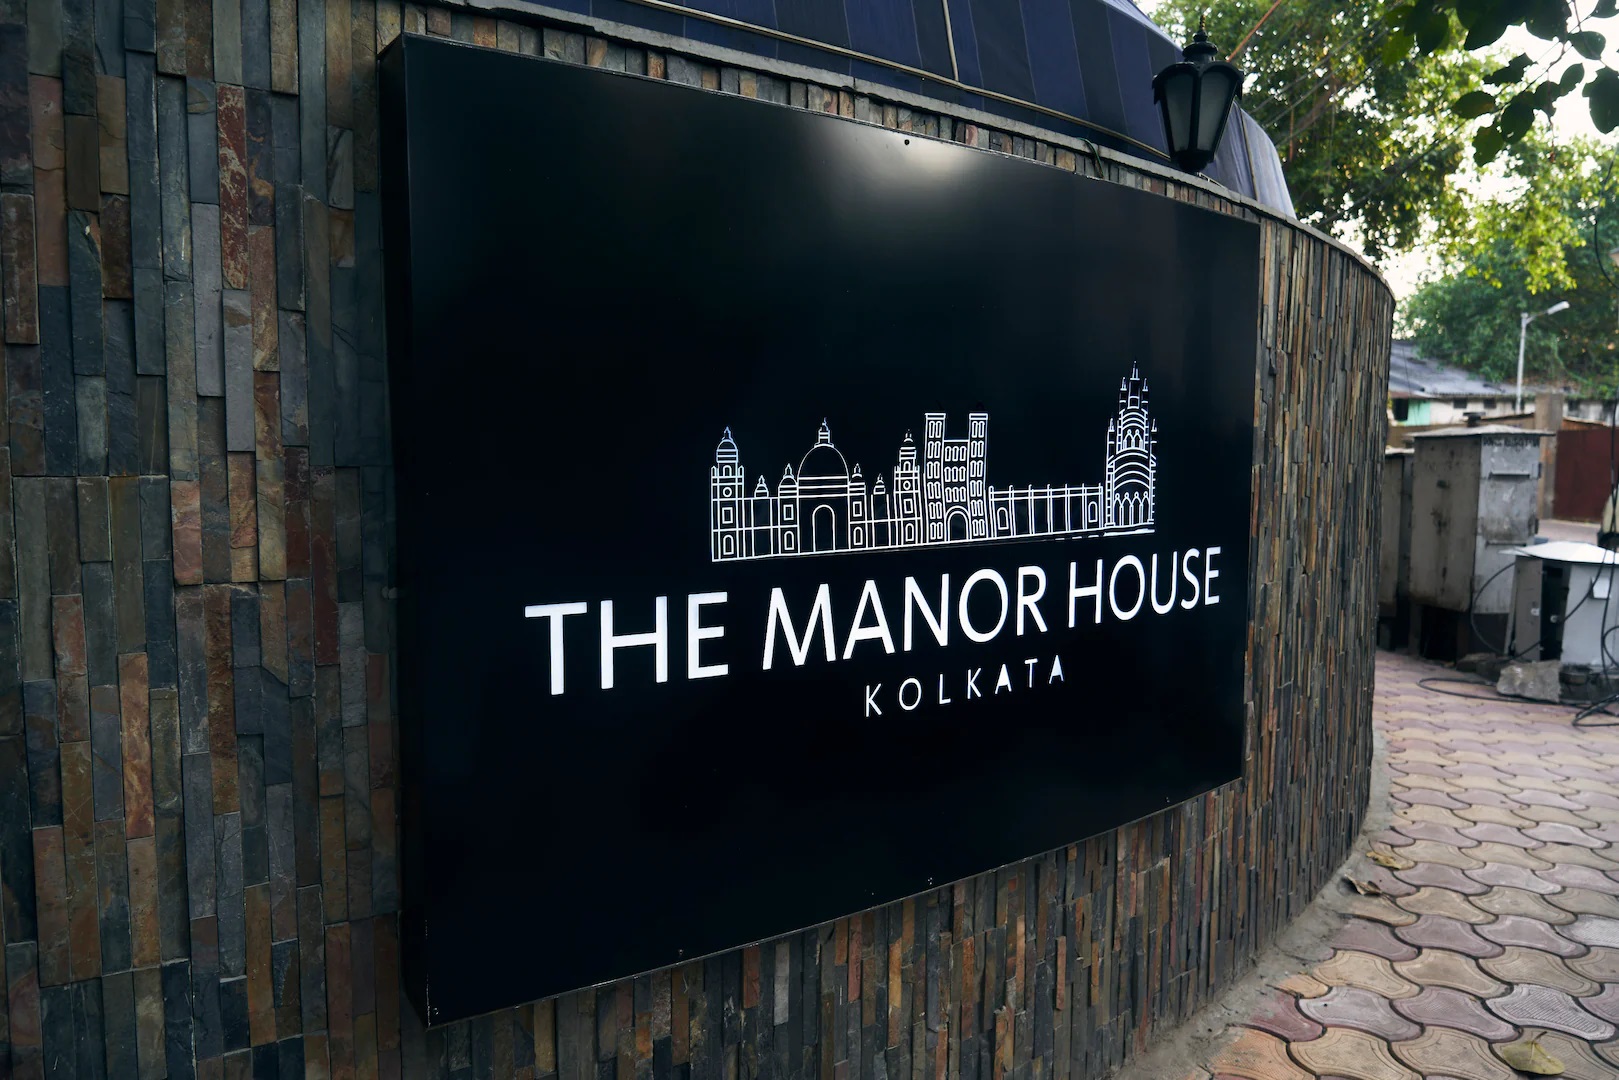 The Manor House Kolkata